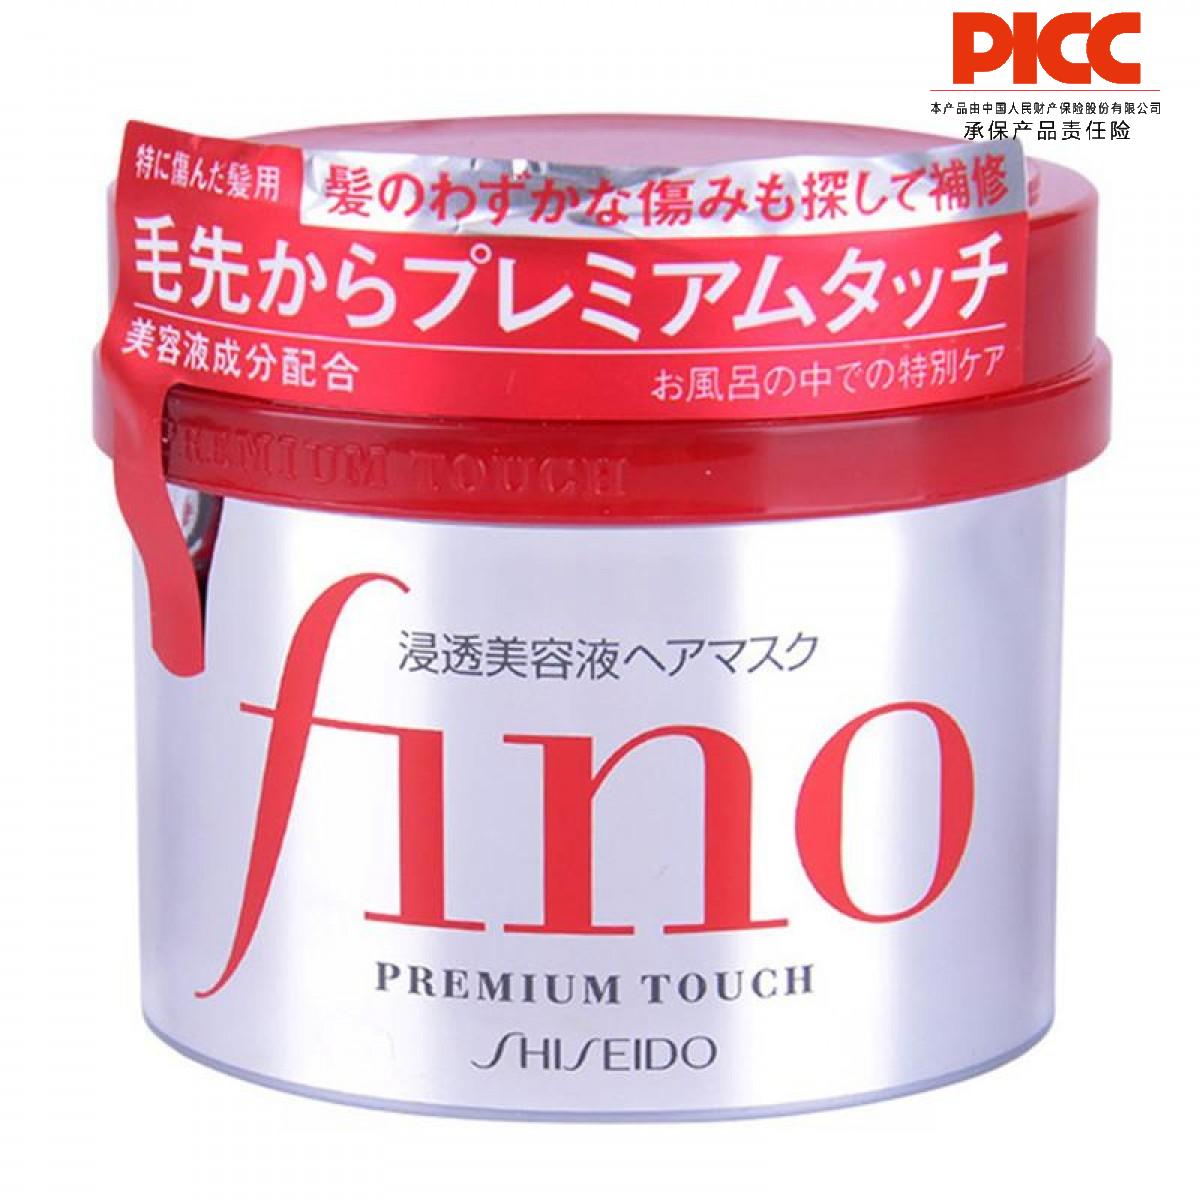 【保稅】日本資生堂ShiseidoFino發膜230g